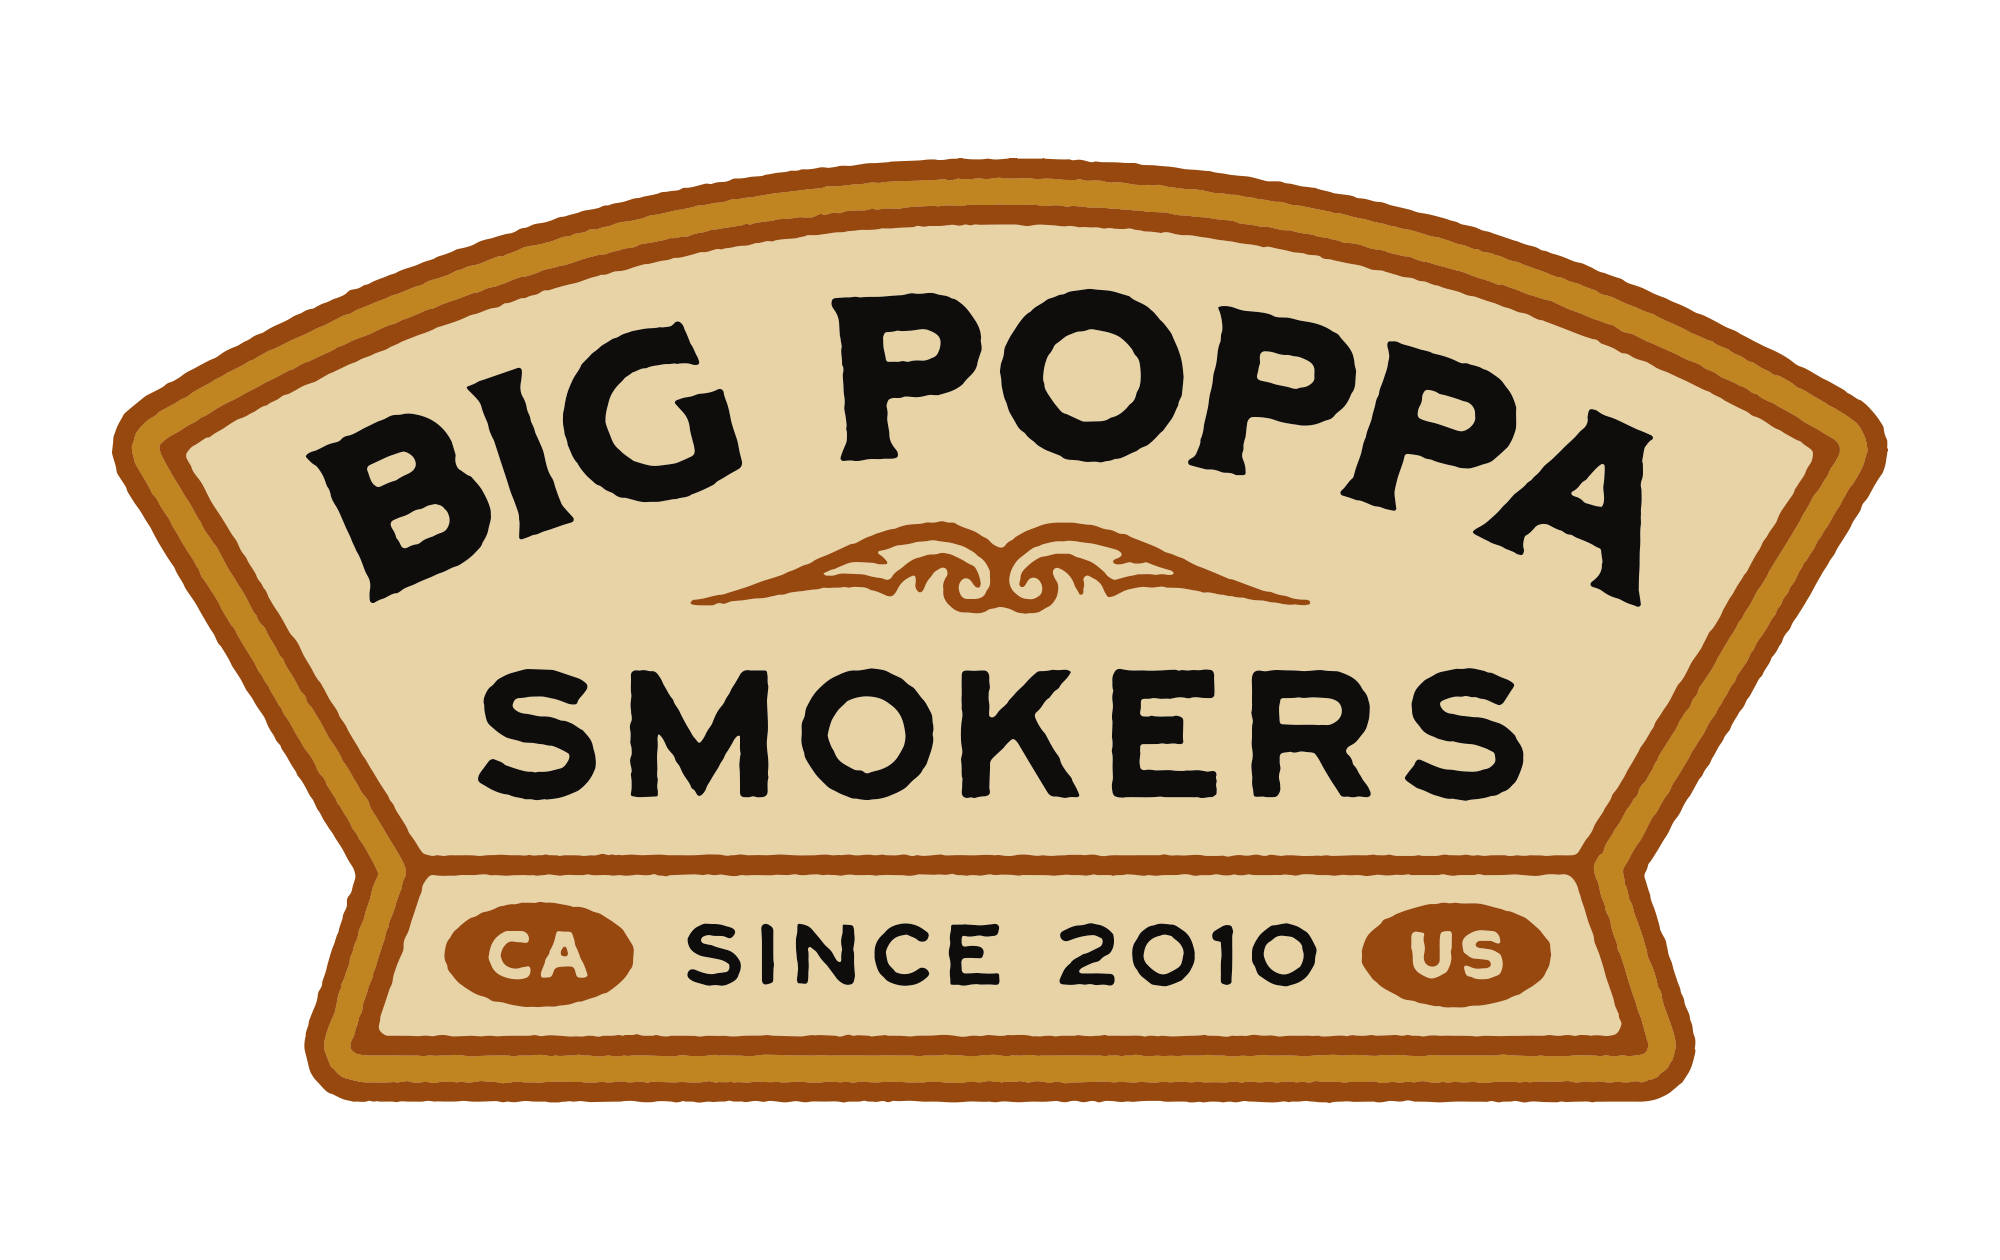 Big Poppa Smokers